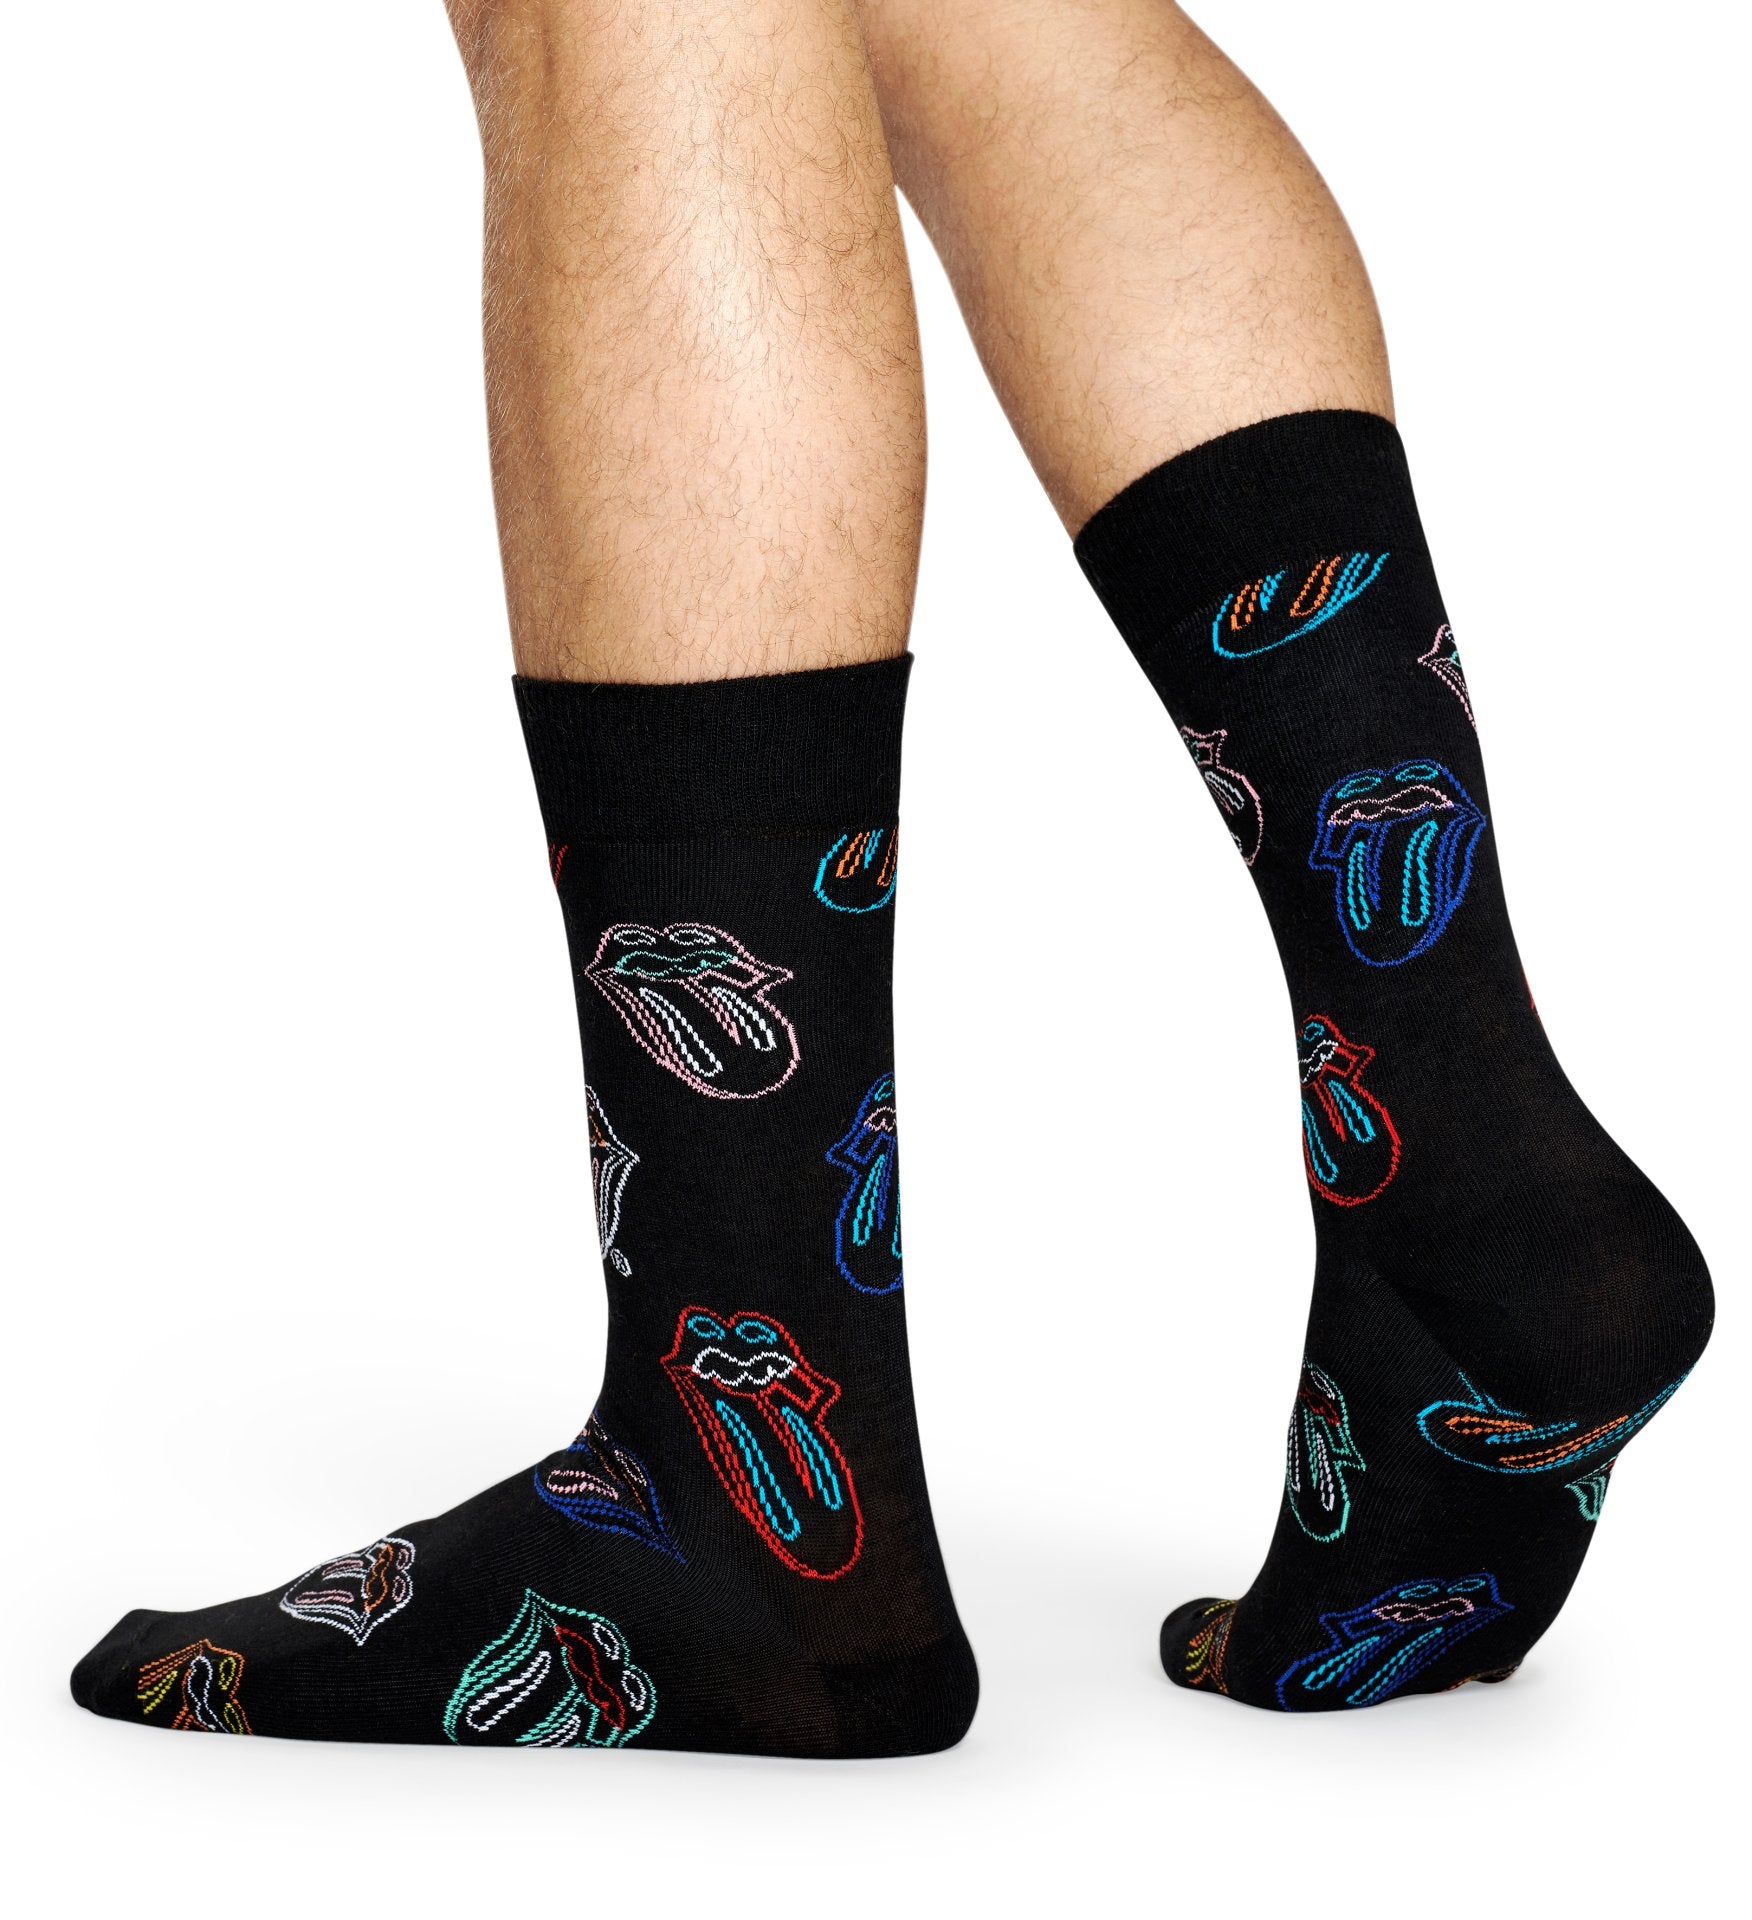 Čierne ponožky s vyplazeným jazykom z kolekcie Happy Socks x Rolling Stones, vzor Midnight Ramble